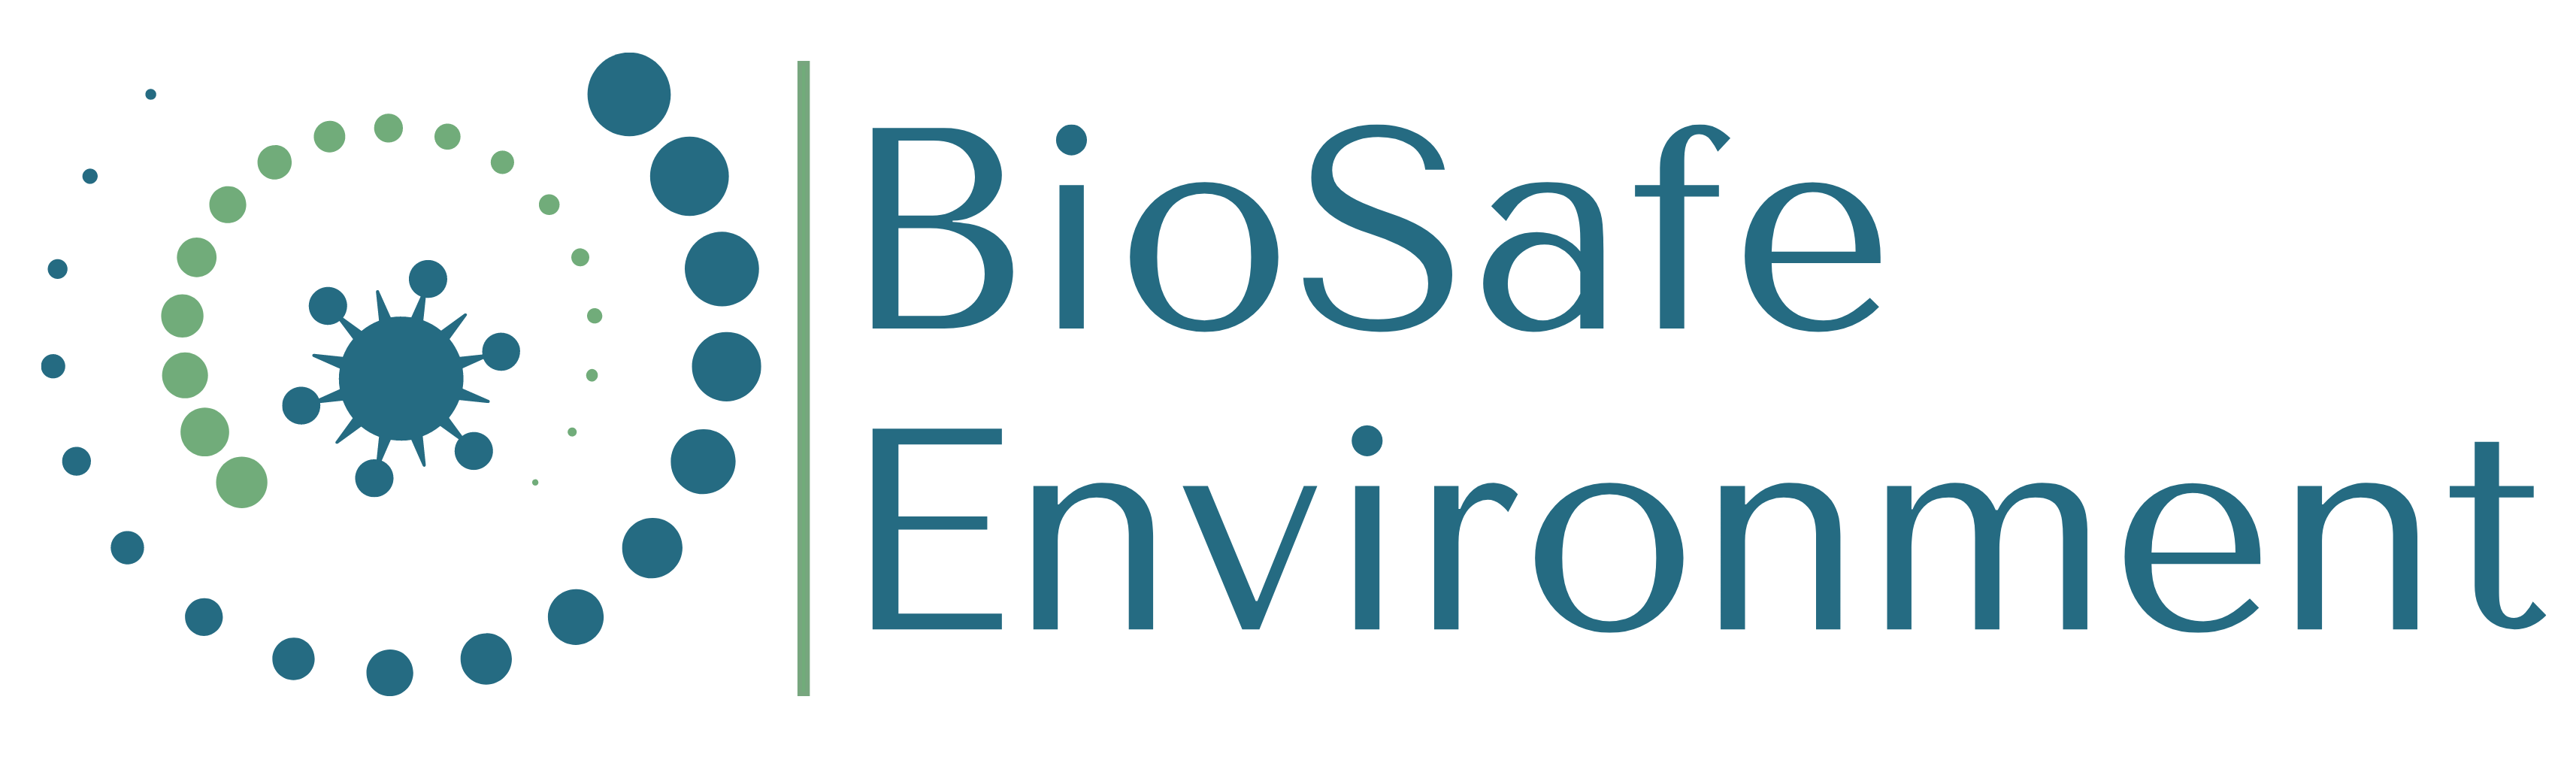 BioSafe Environment Mold Remediation in West Michigan Logo